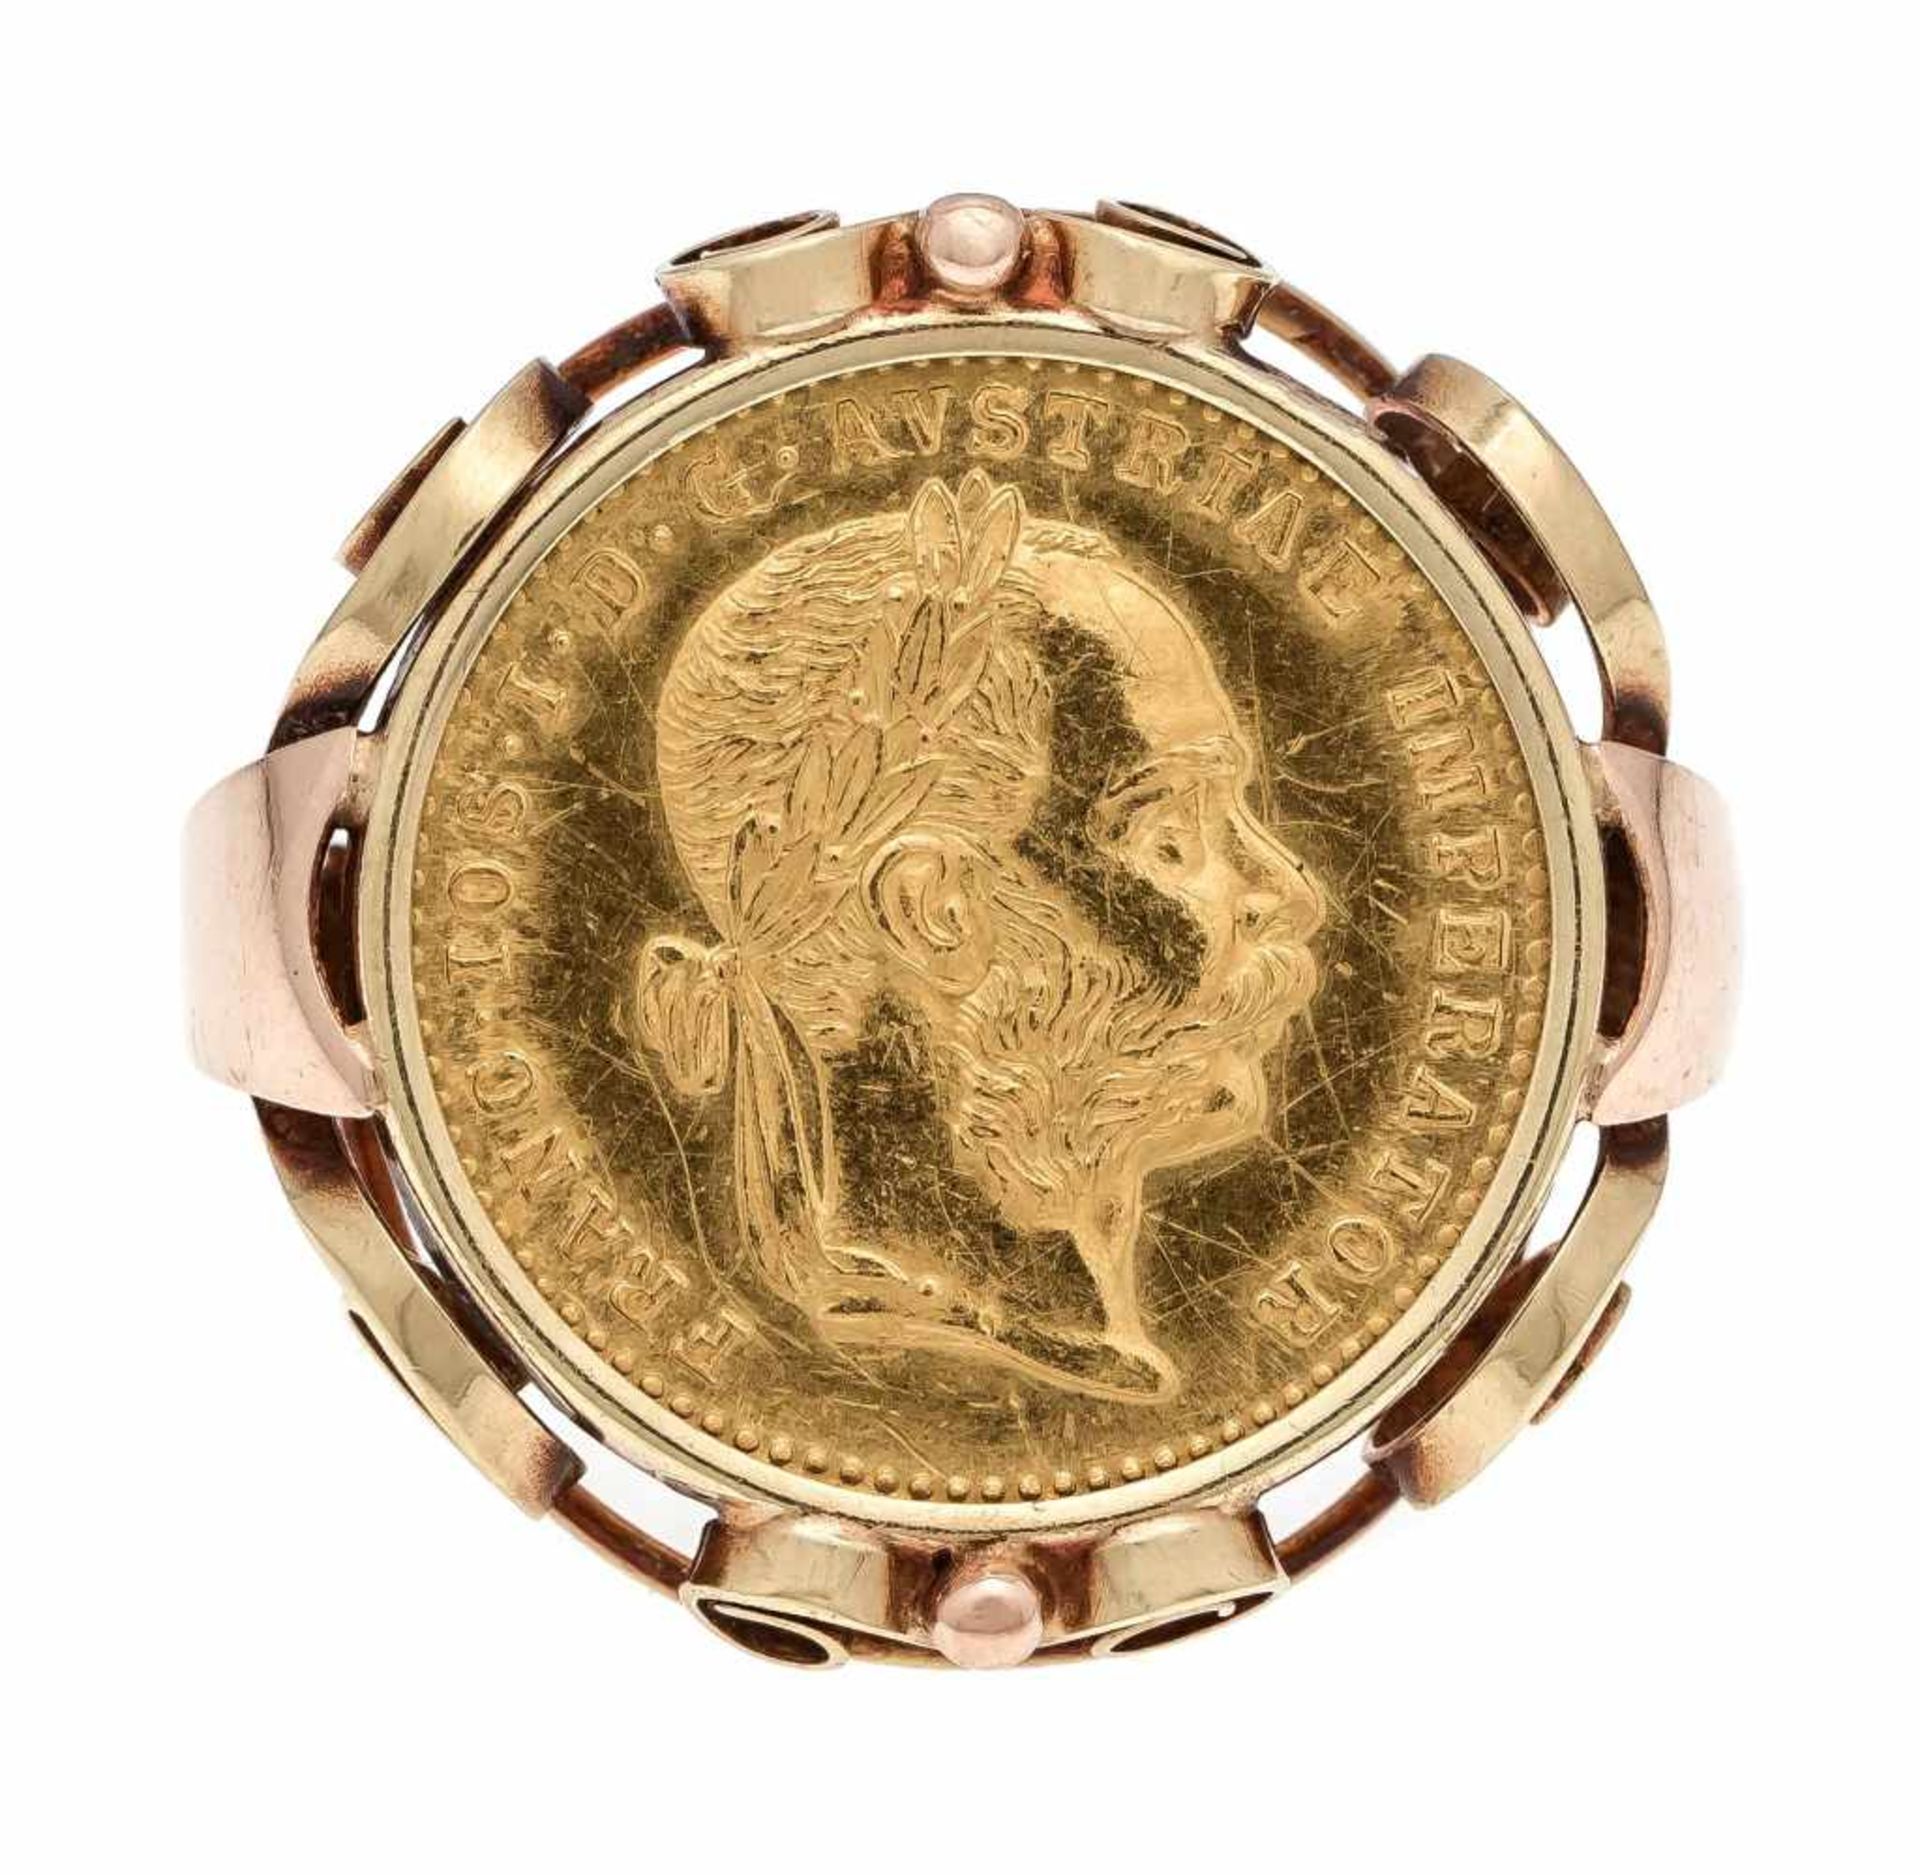 Münz-Ring GG 750/000 mit einer Goldmünze 986/000 1 Dukat 1915, RG 53, 6,7 gCoin ring GG 750/000 with - Image 2 of 3